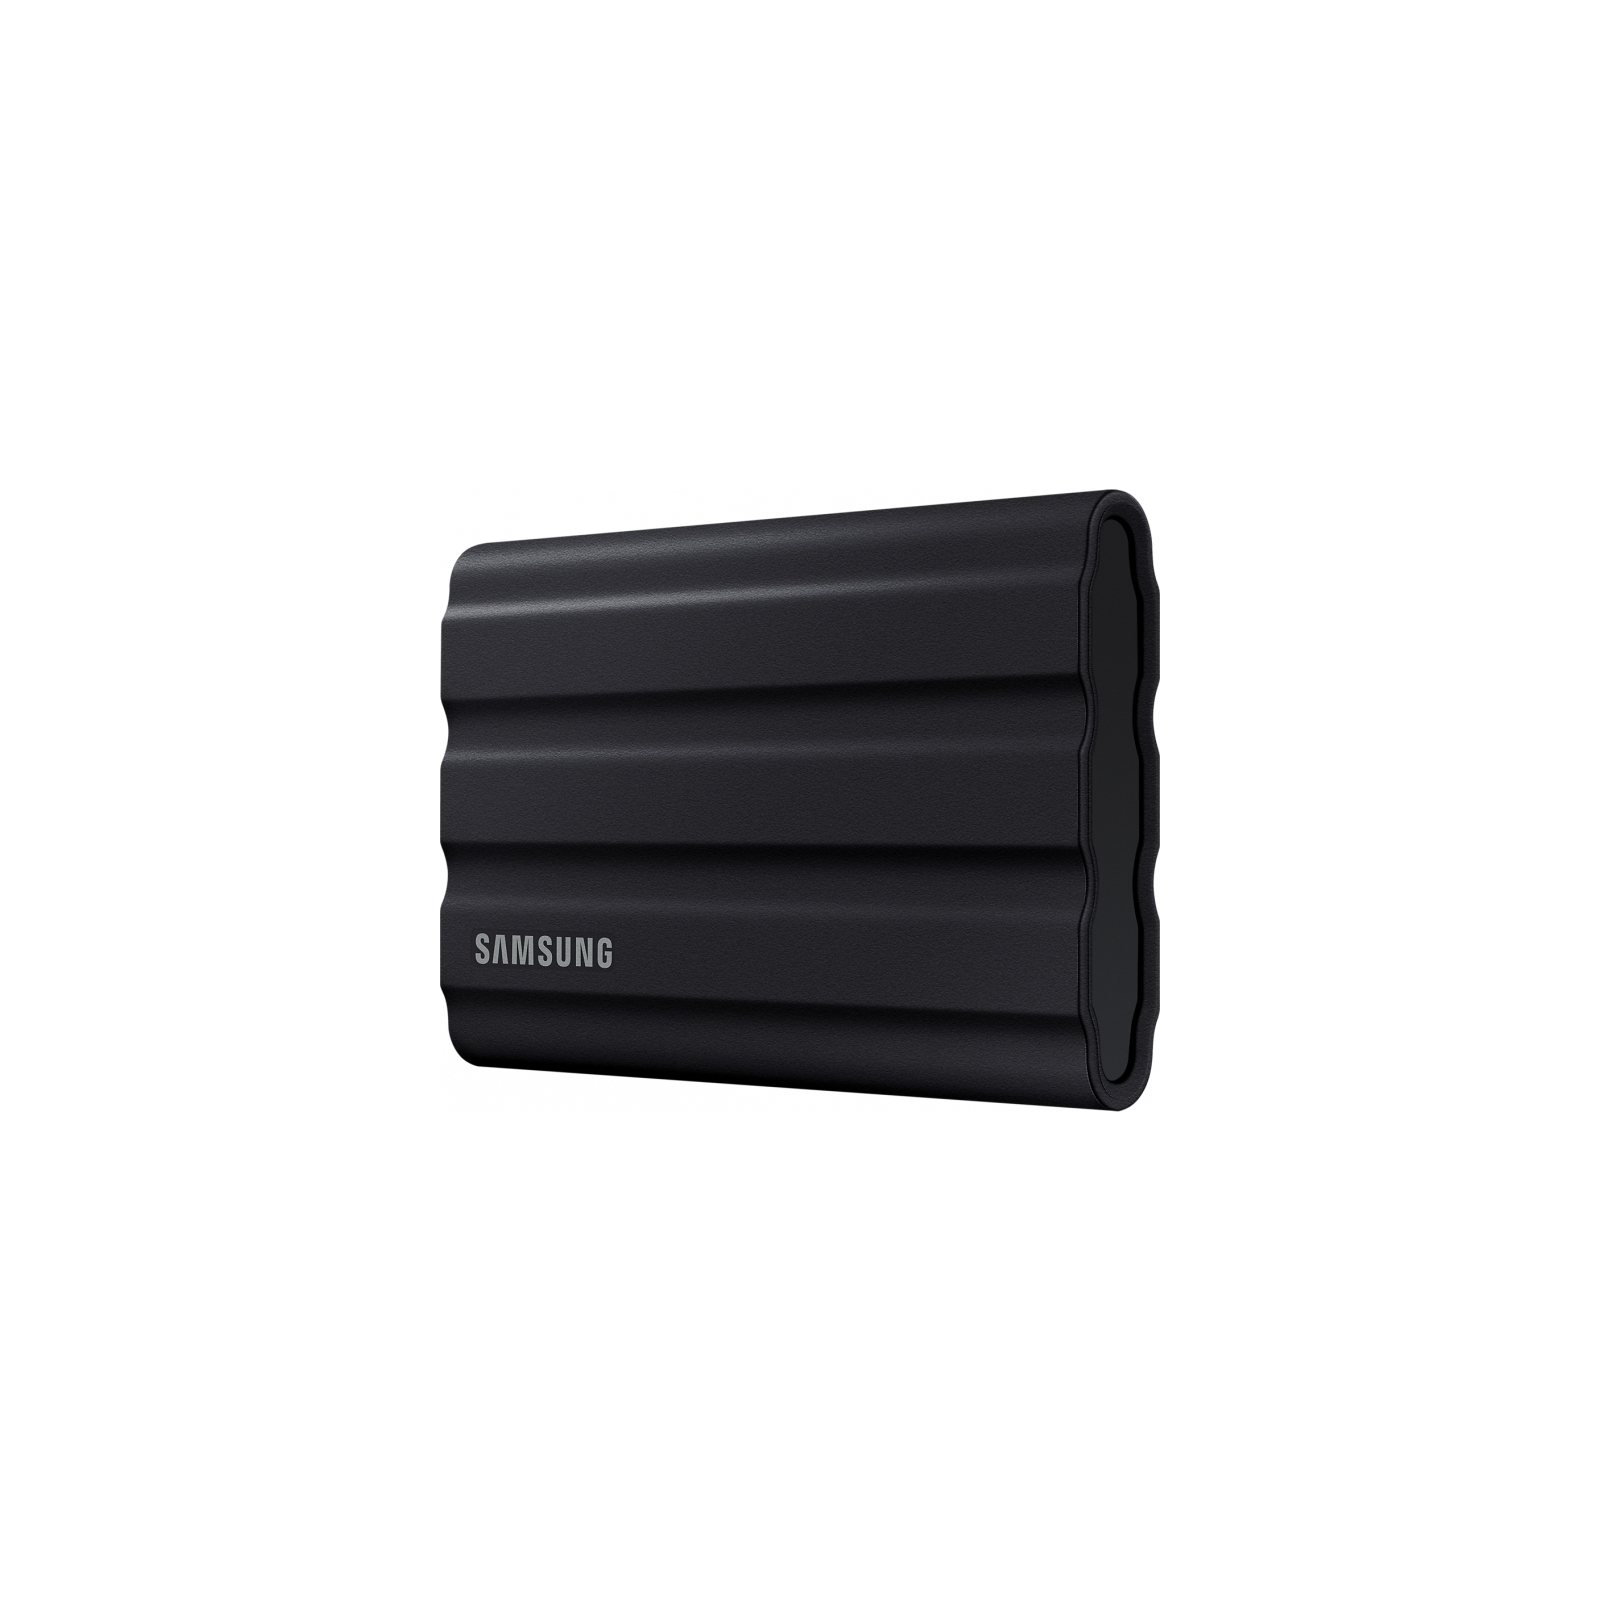 Накопитель SSD USB 3.2 1TB T7 Shield Samsung (MU-PE1T0R/EU) изображение 4